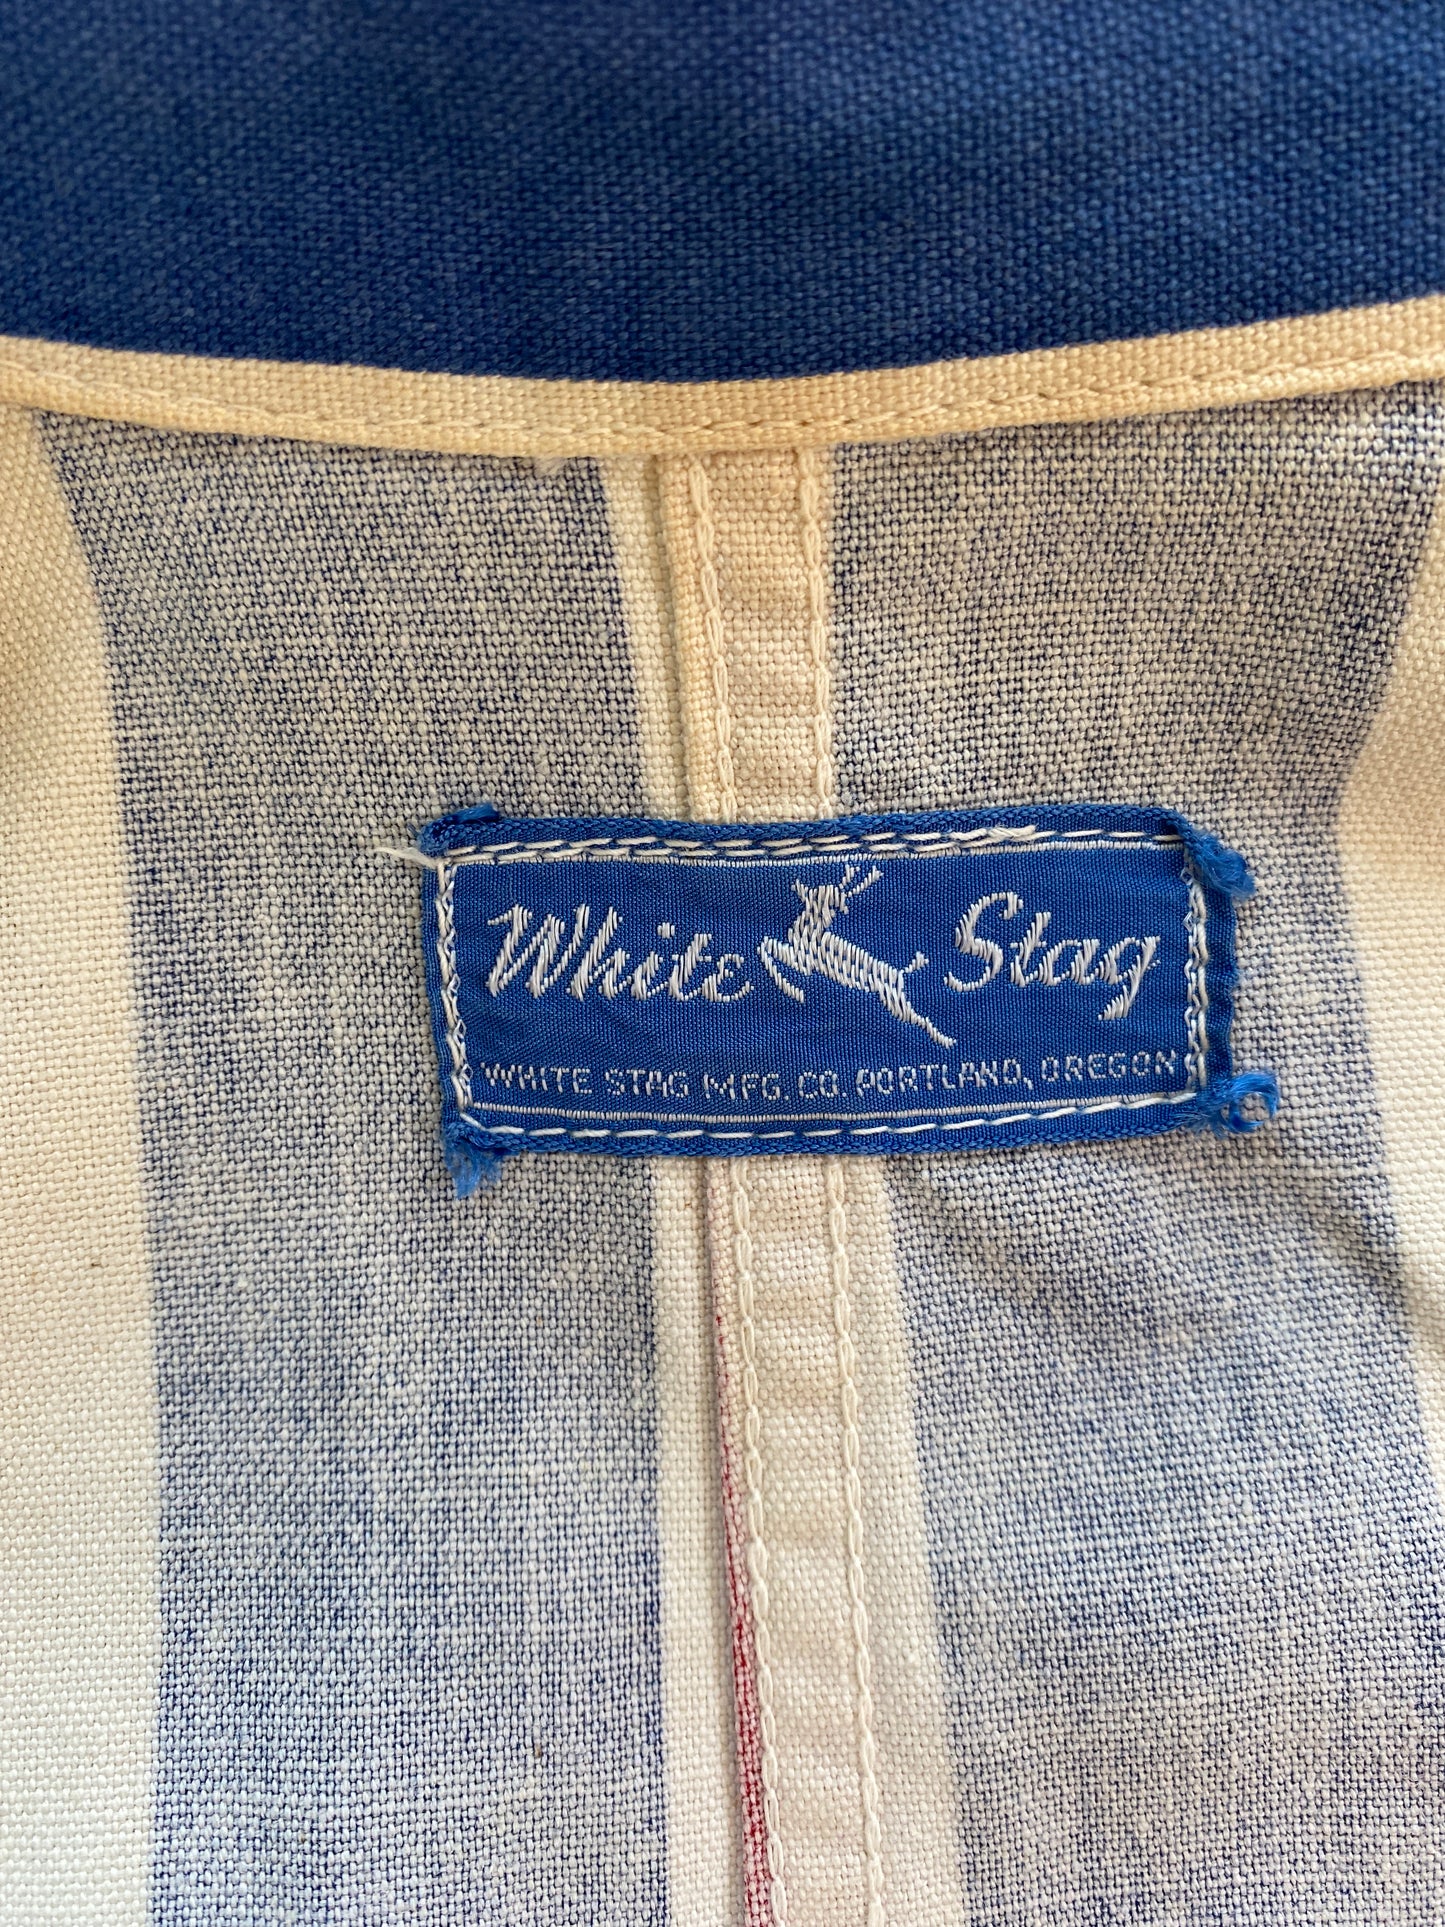 1940s White Stag Chore Coat Women's Size M